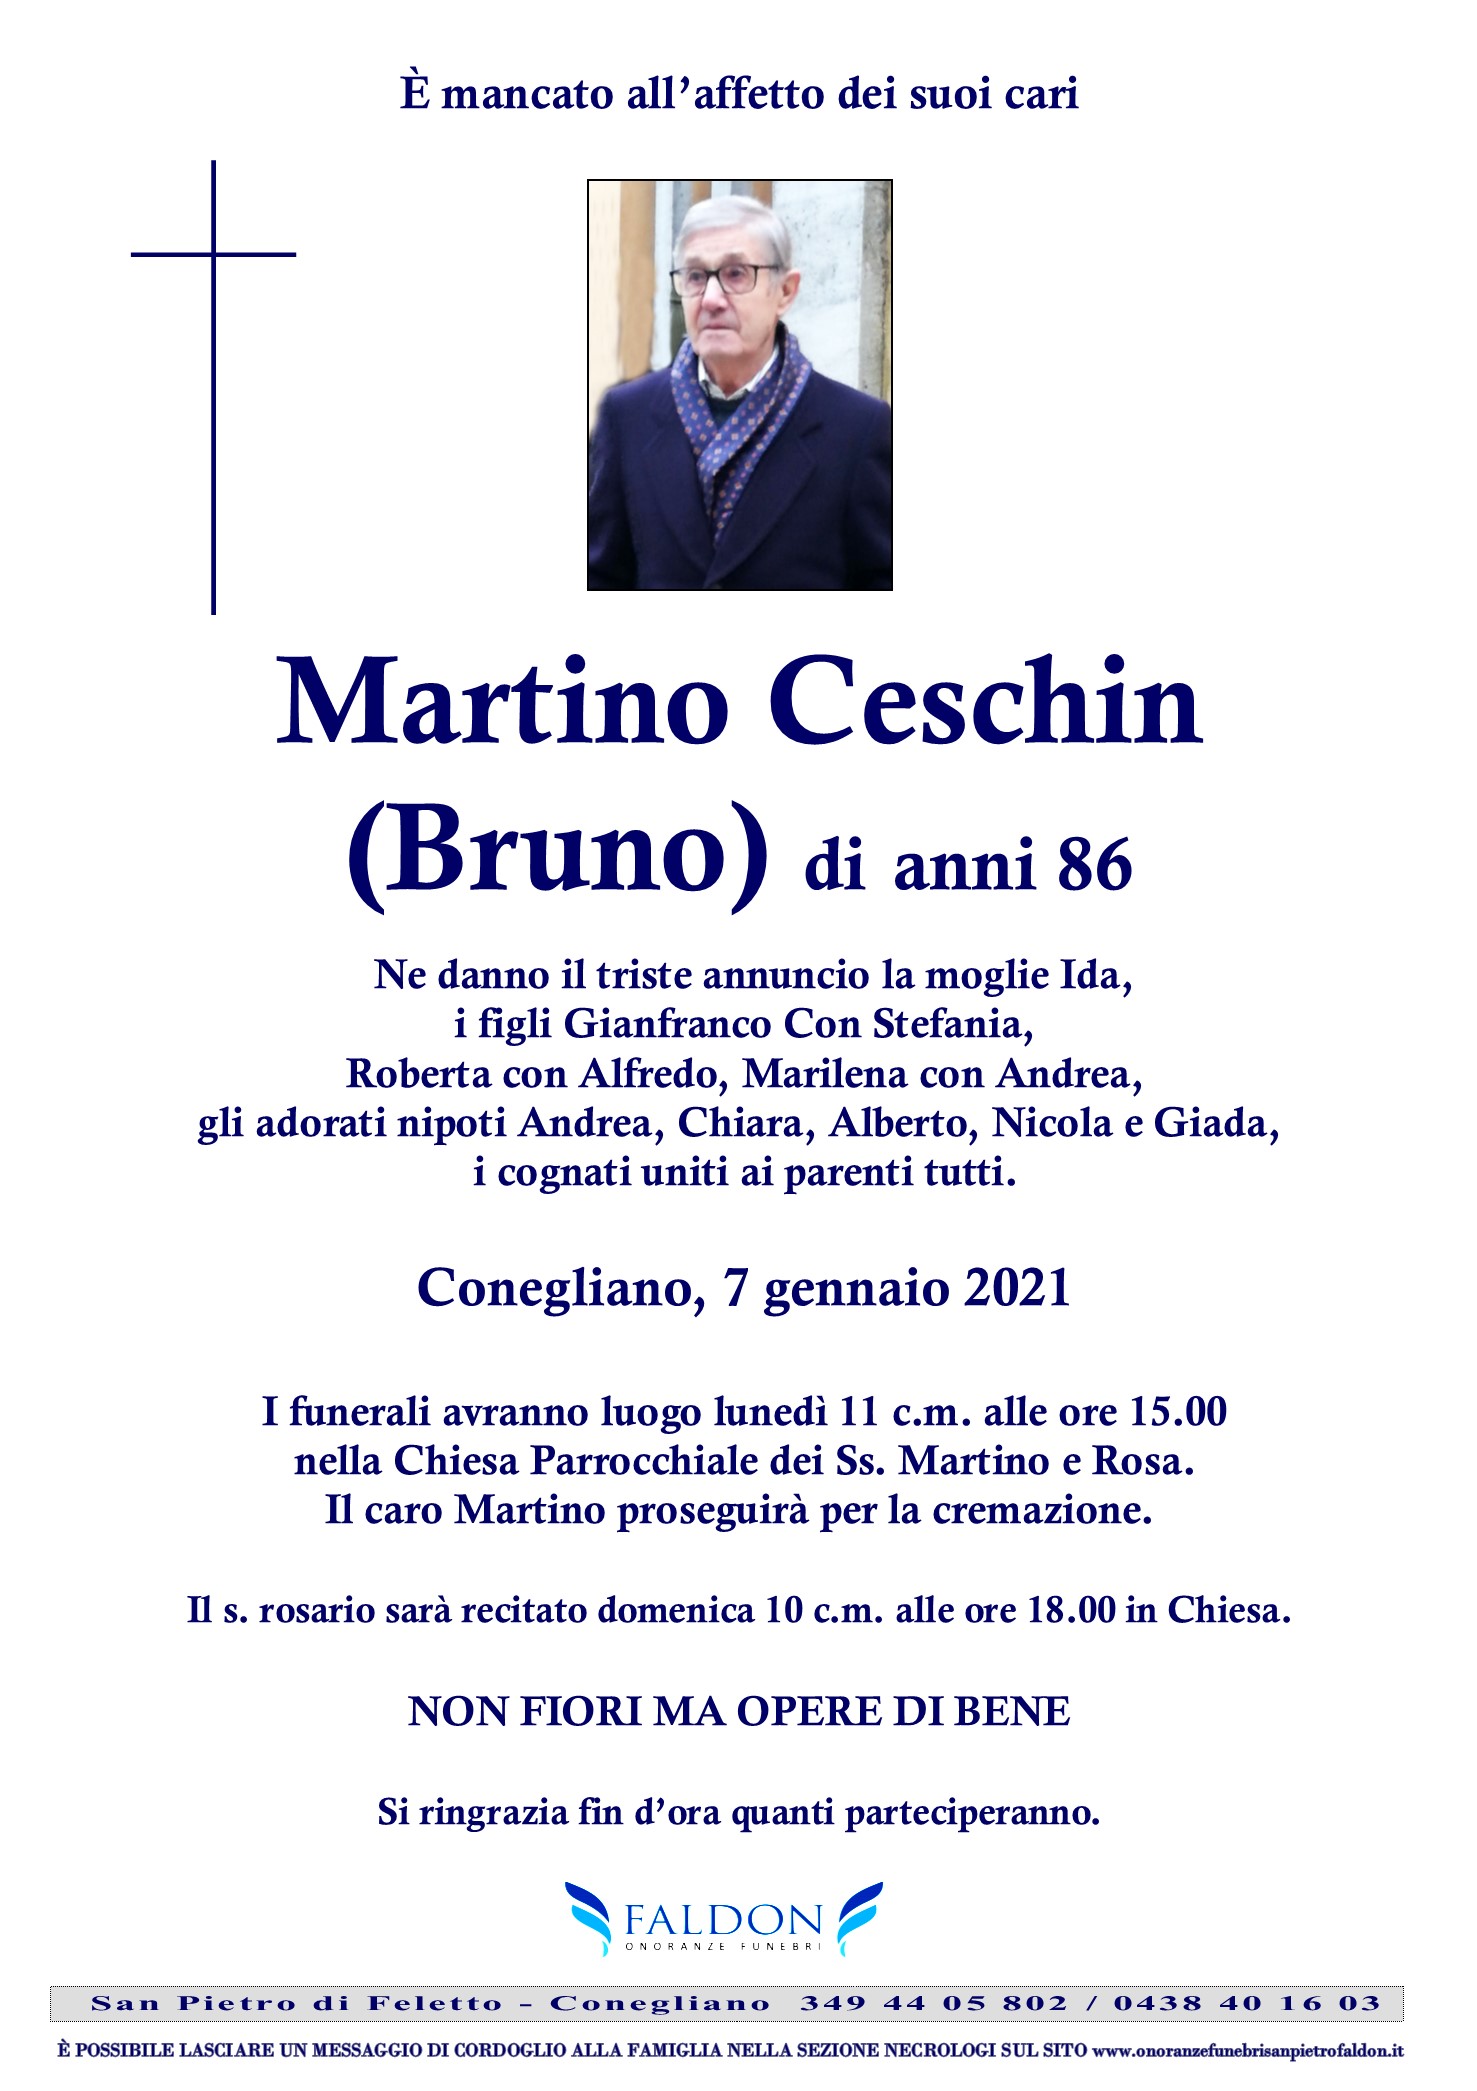 Martino Ceschin